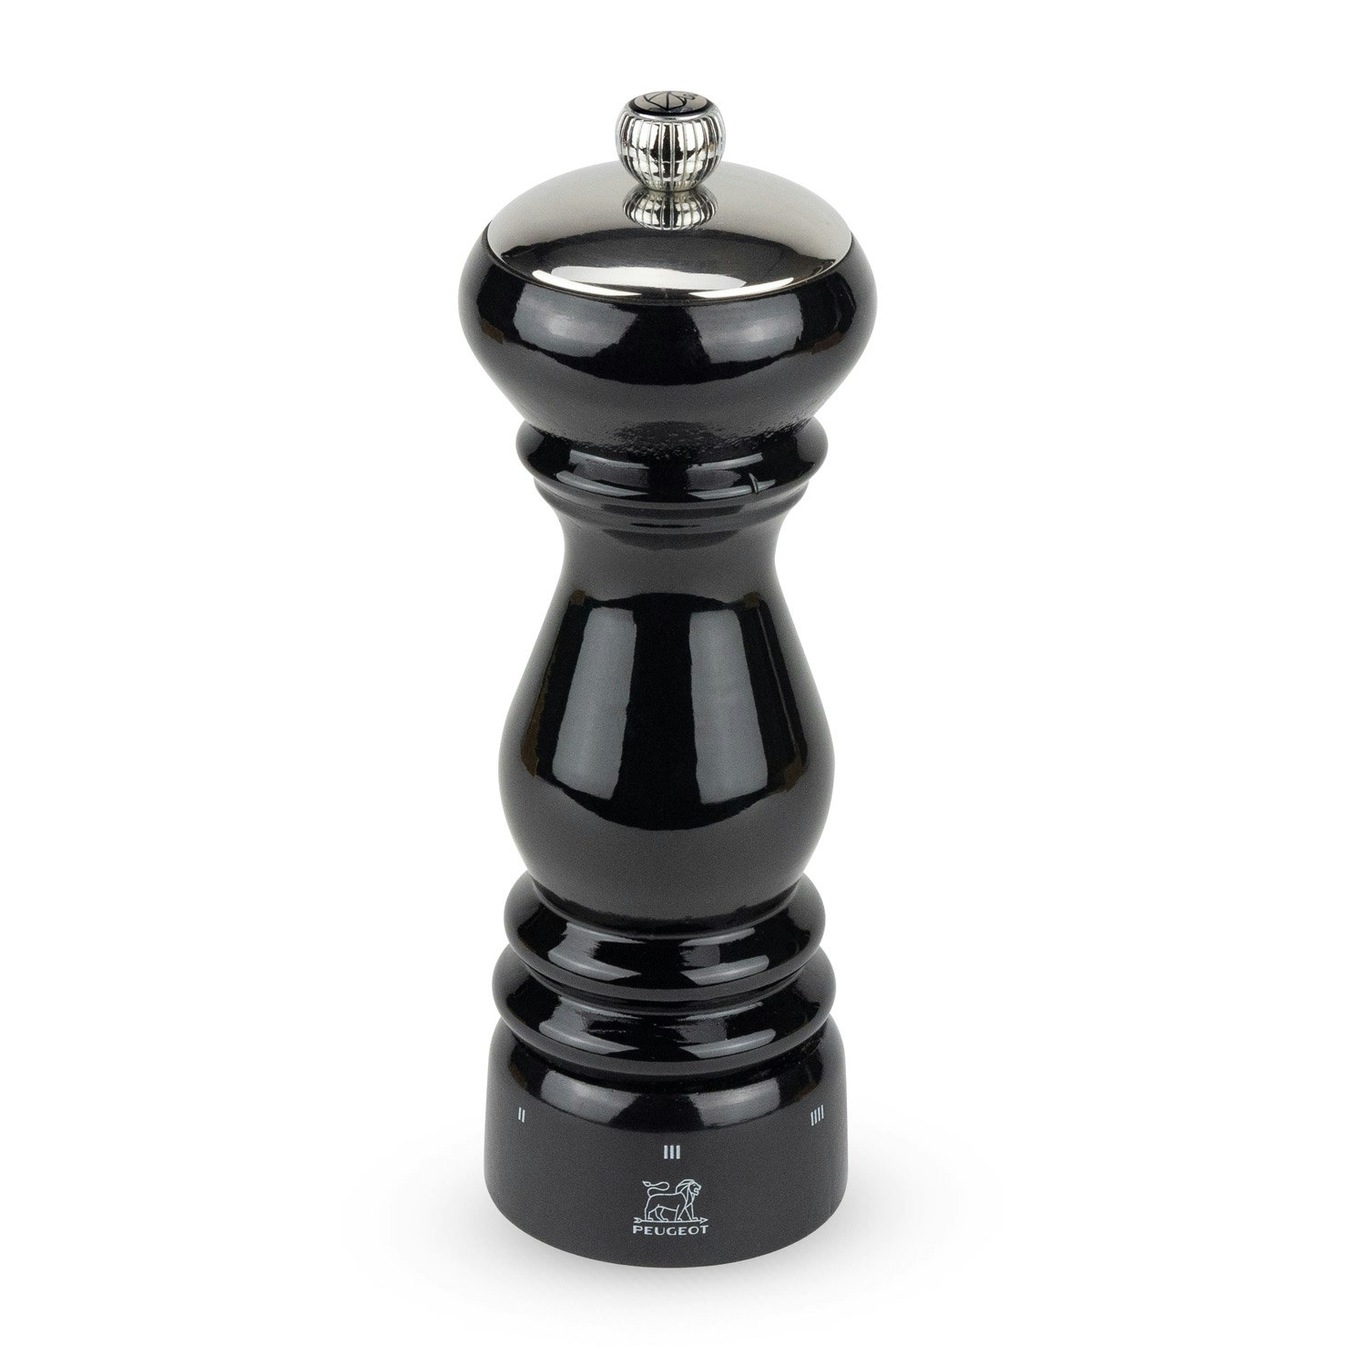 https://royaldesign.com/image/11/peugeot-paris-icone-uselect-pepper-mill-black-lacquer-1?w=800&quality=80